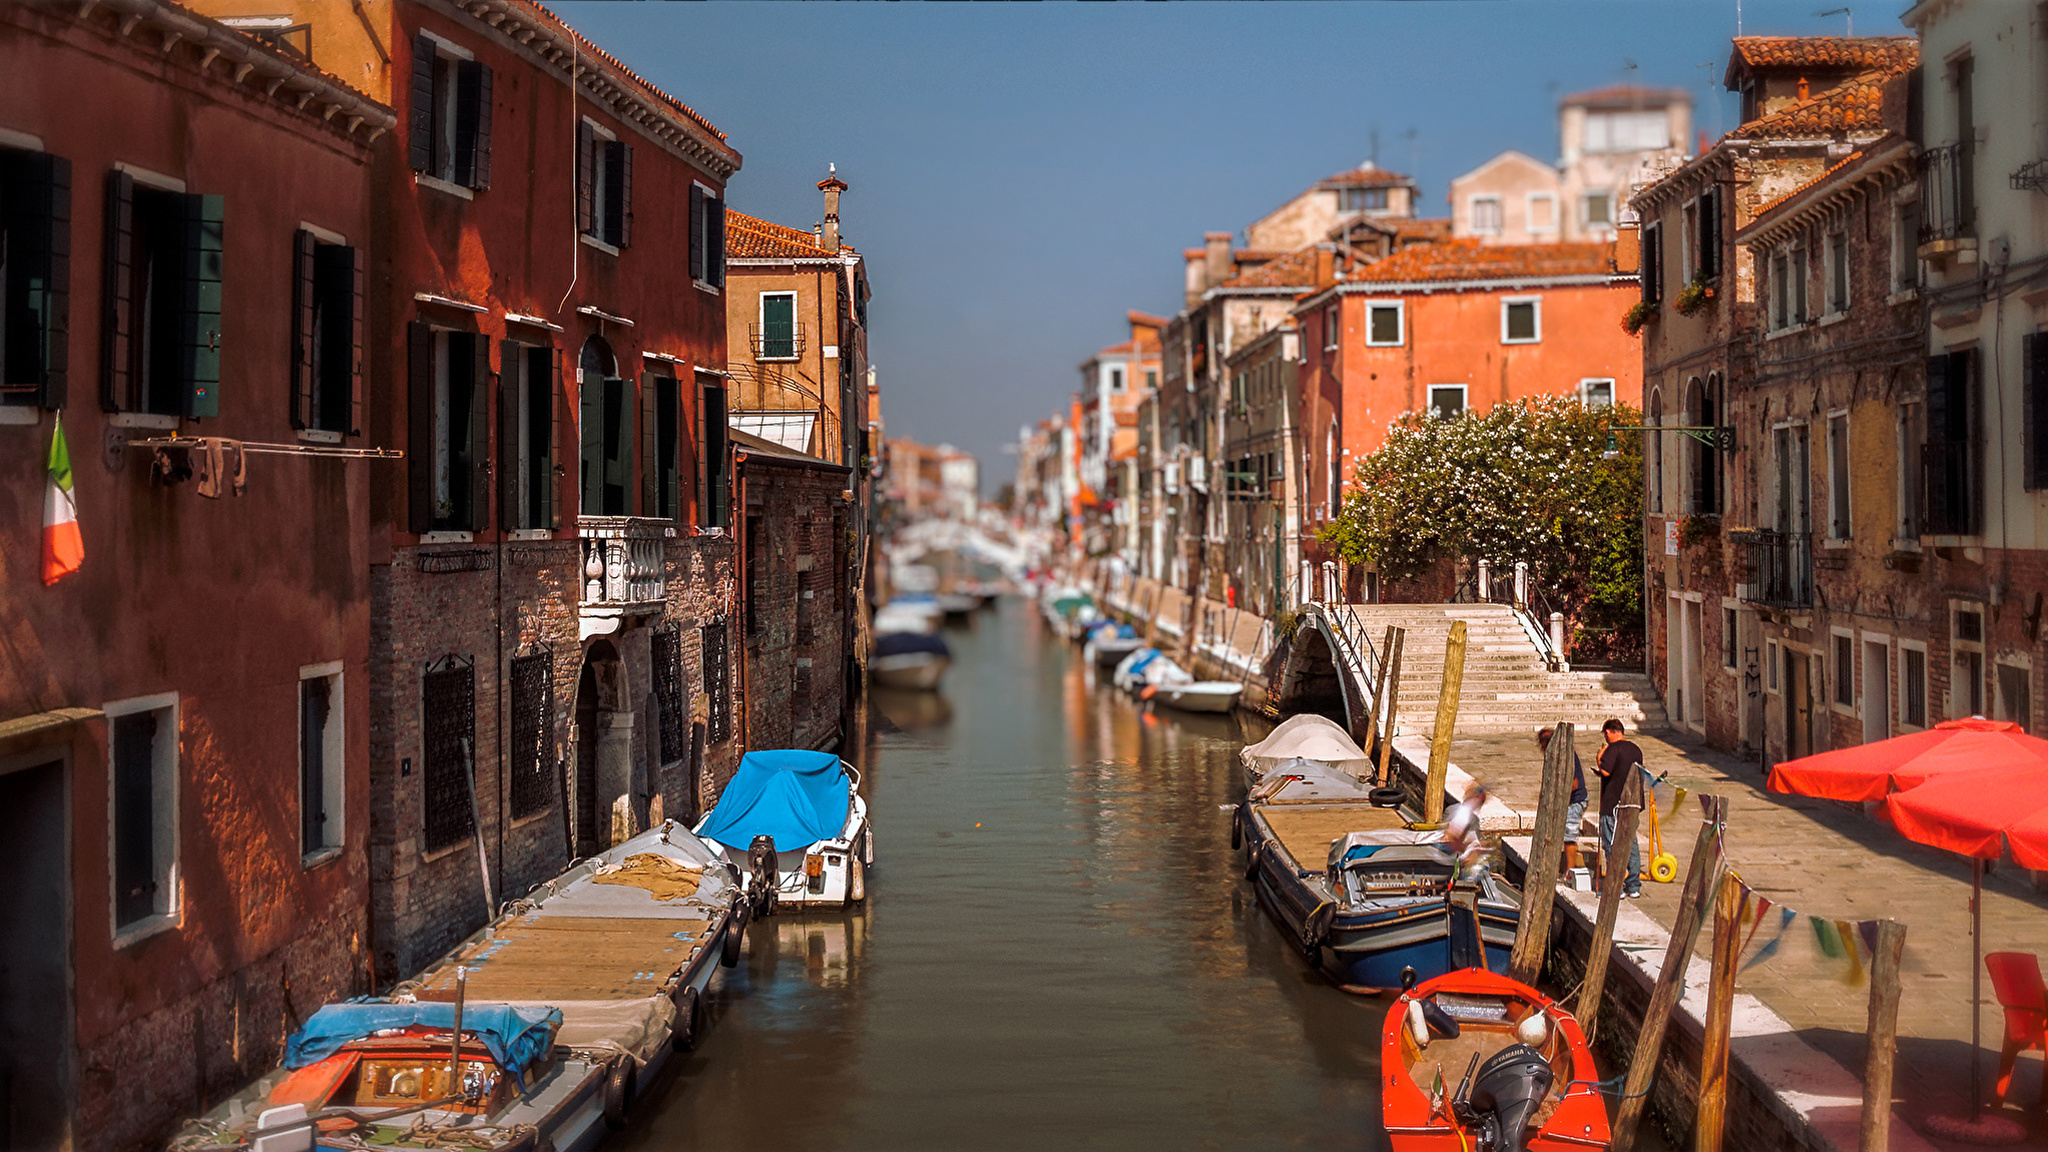 Река в венеции. Венеция Италия улочки. Италия каналы Венеции. Венеция итальянская улочка.